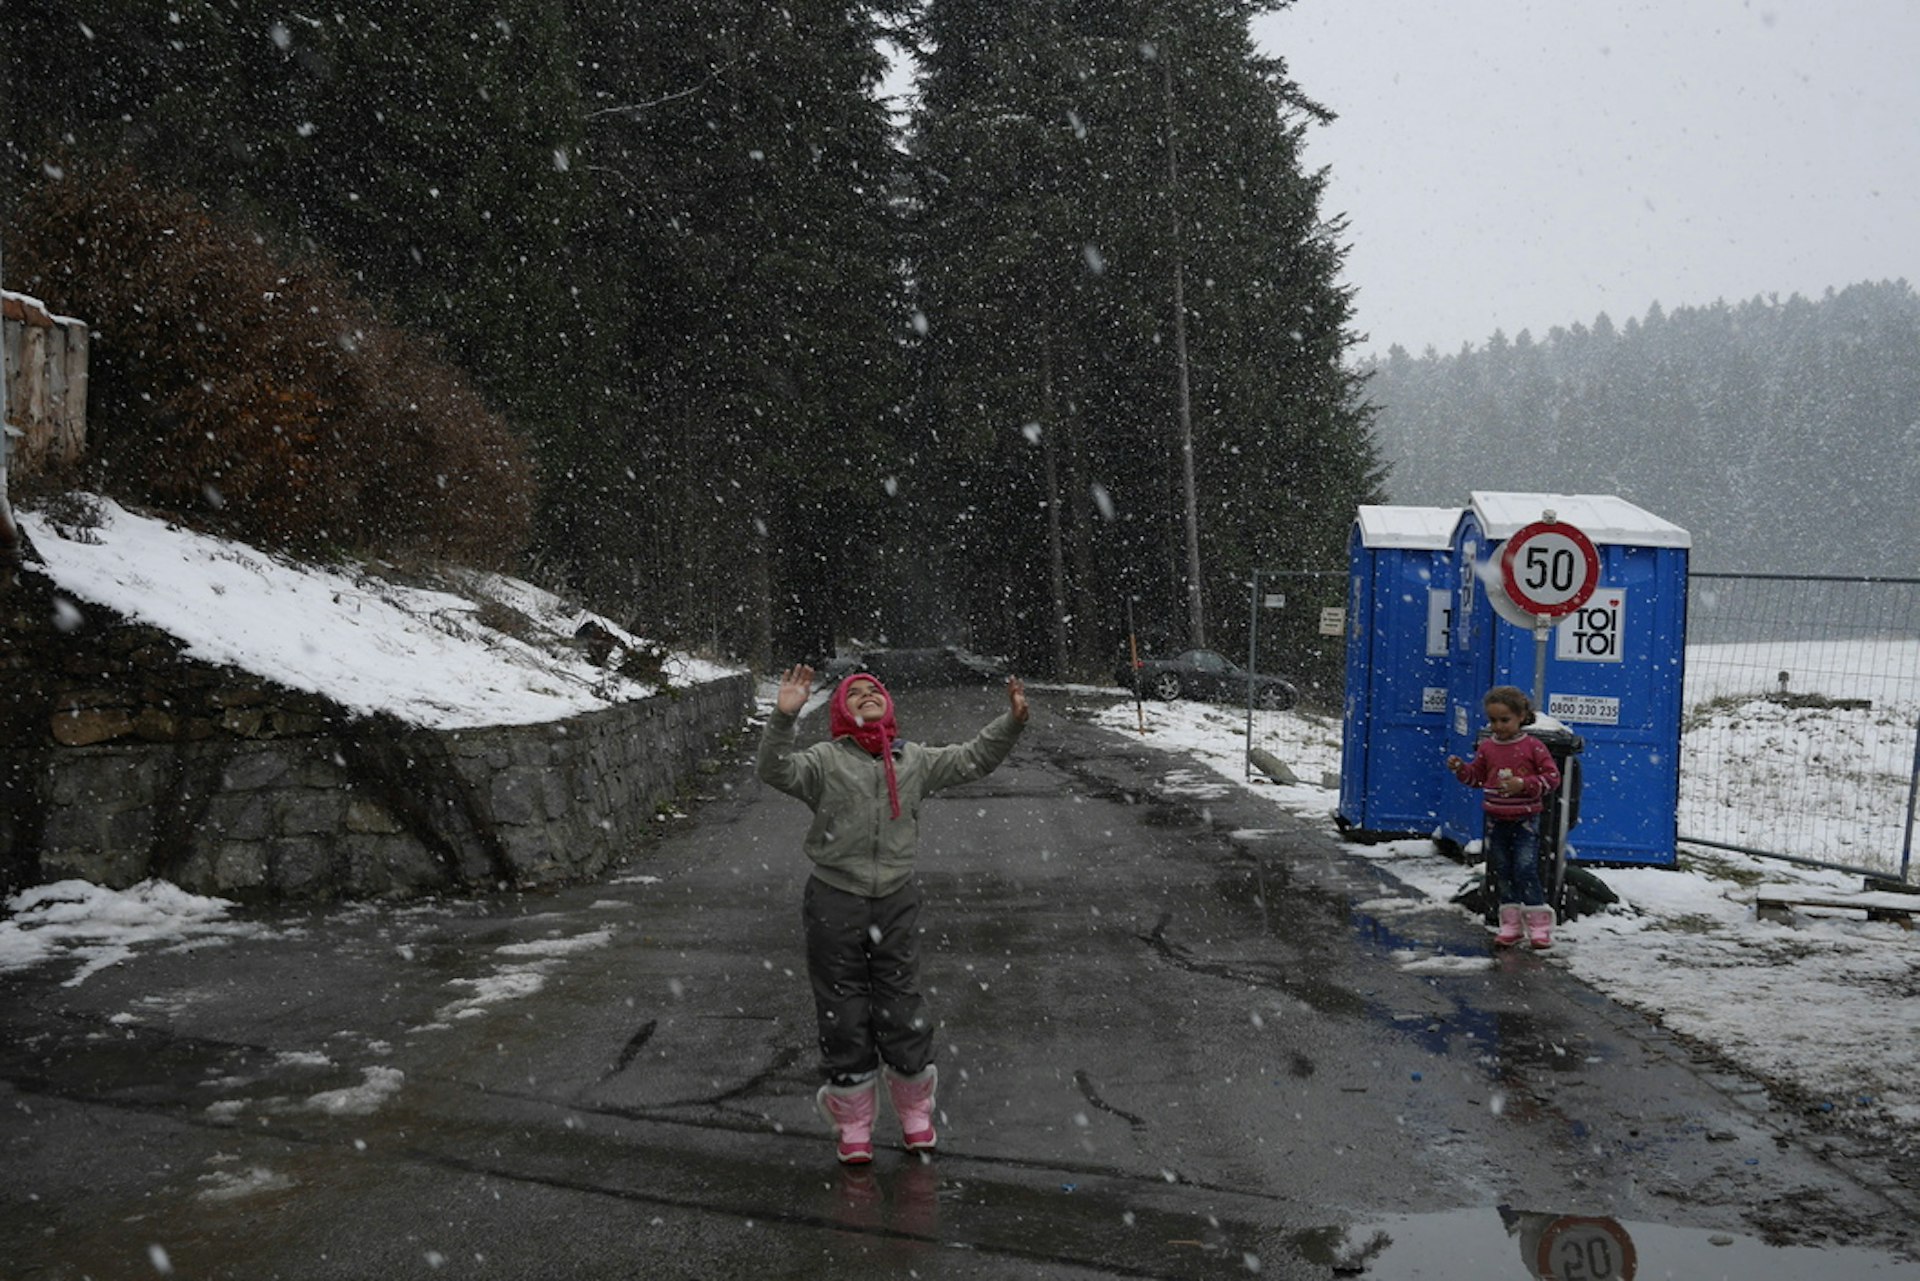 Thomas Dworzak GERMANY. AUSTRIA. Wegscheid border post. November 2015. Syrian refugees at Austrian/German border, waiting to cross to Bavaria. The girl is still on the Austrian side.